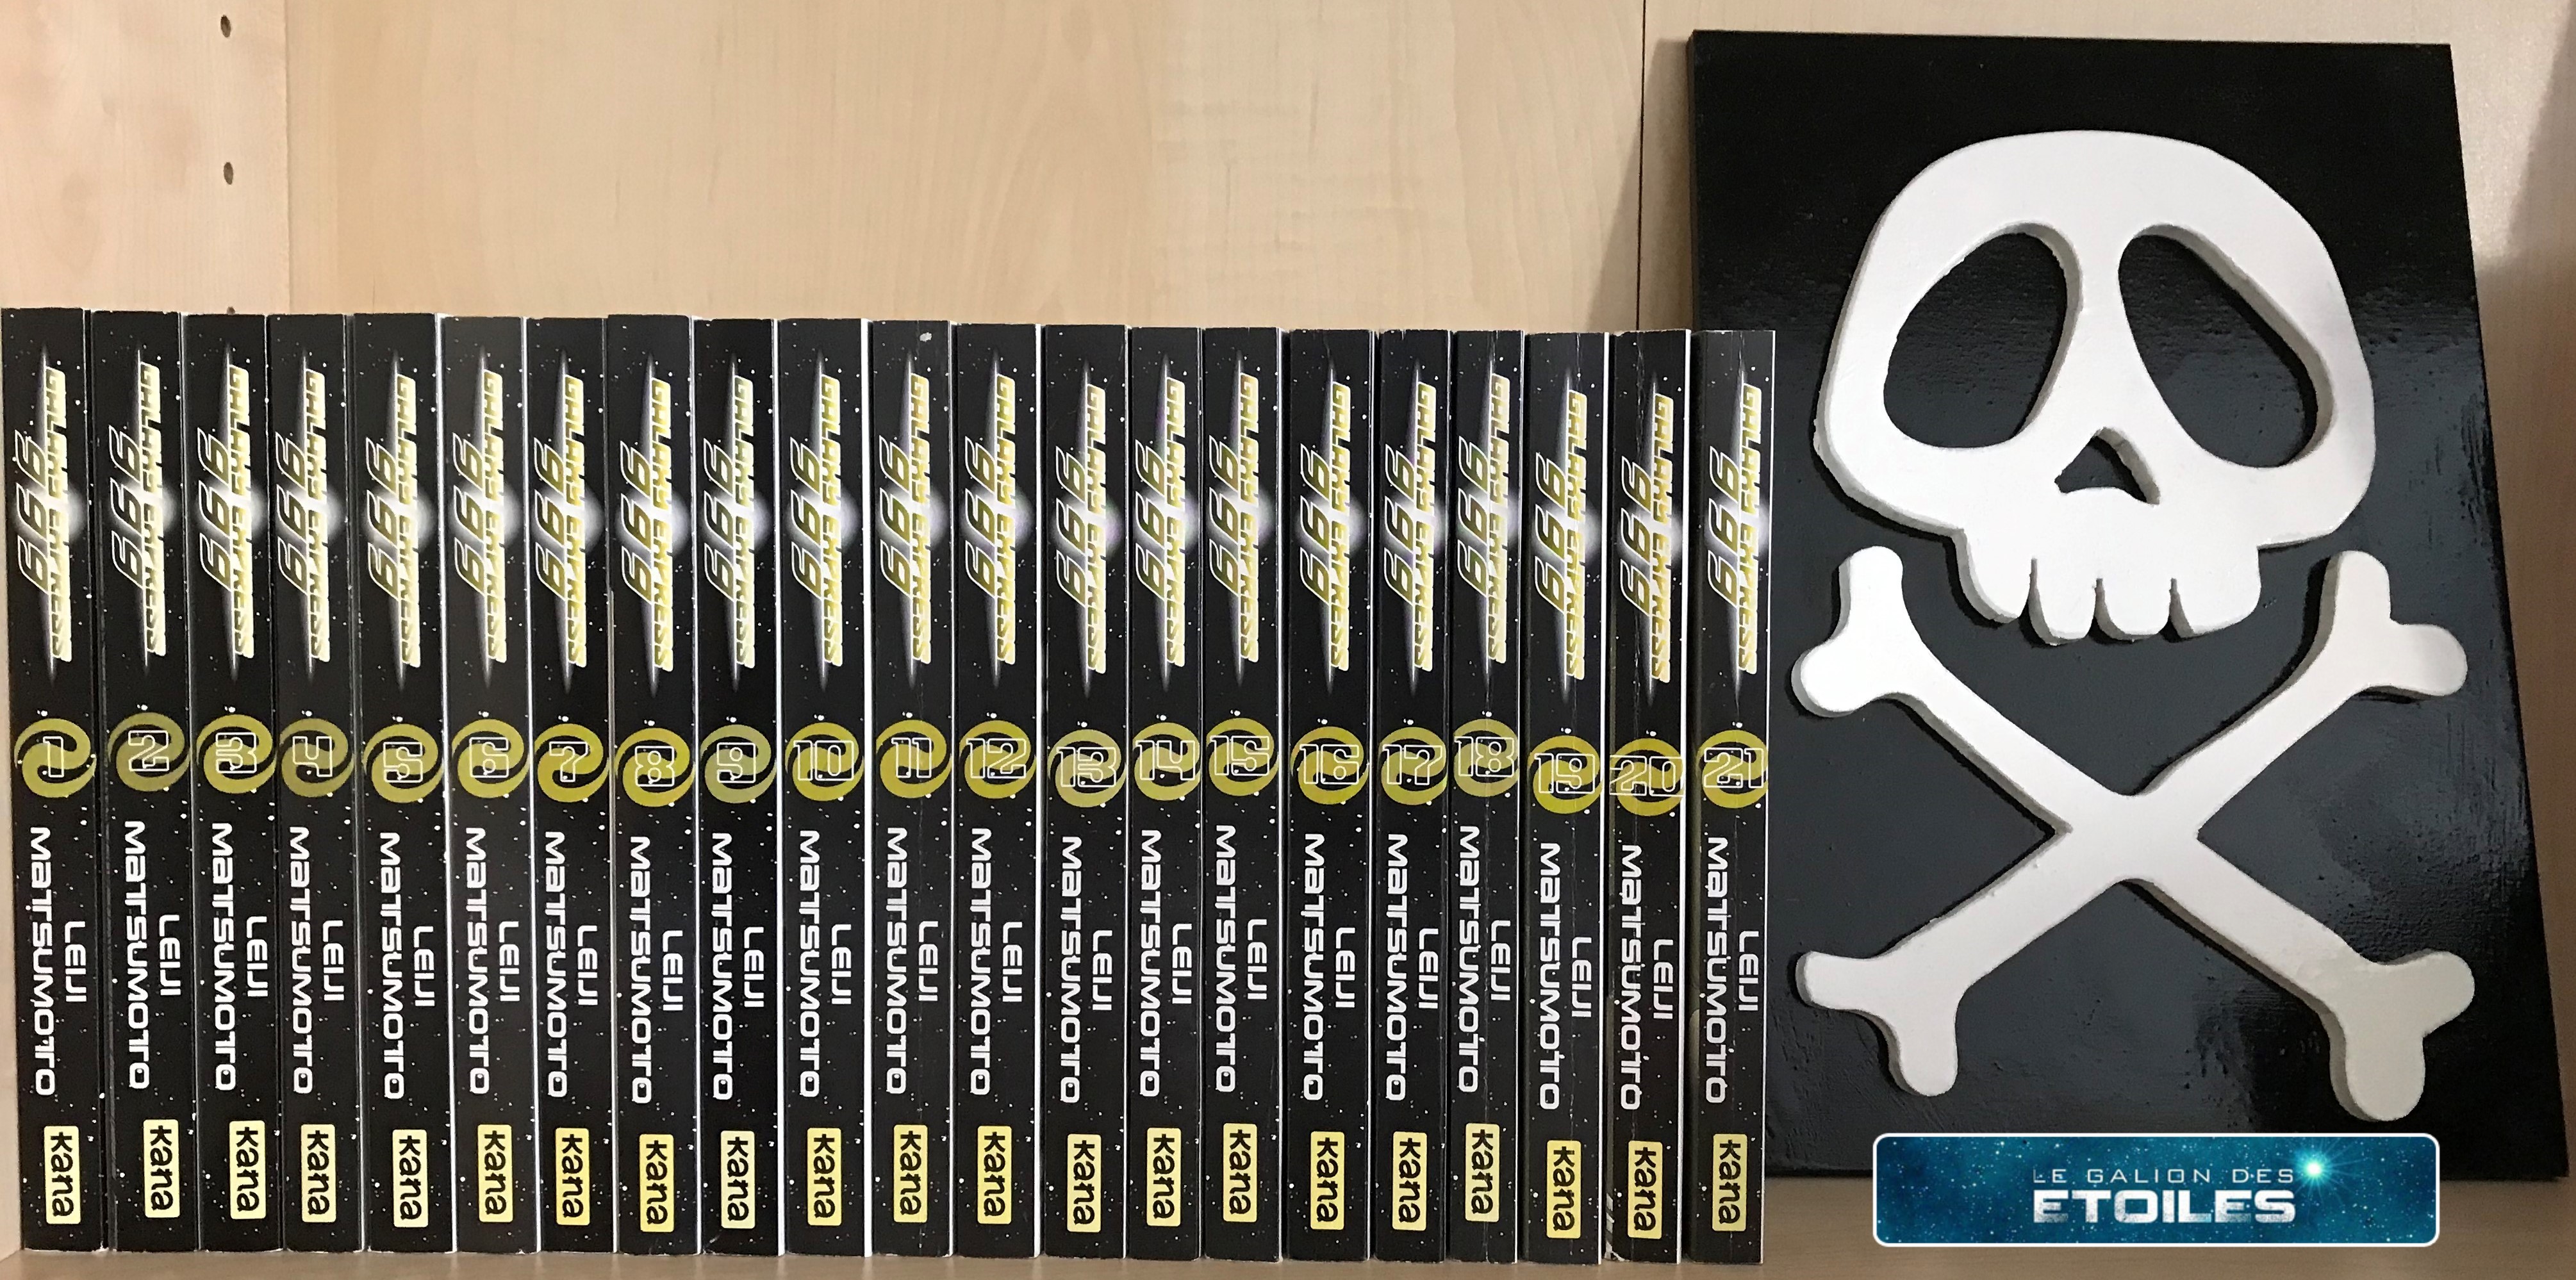 Les 21 mangas de la série Galaxy Express 999 | Photo @ 2023 Koyolite Tseila, collection privée